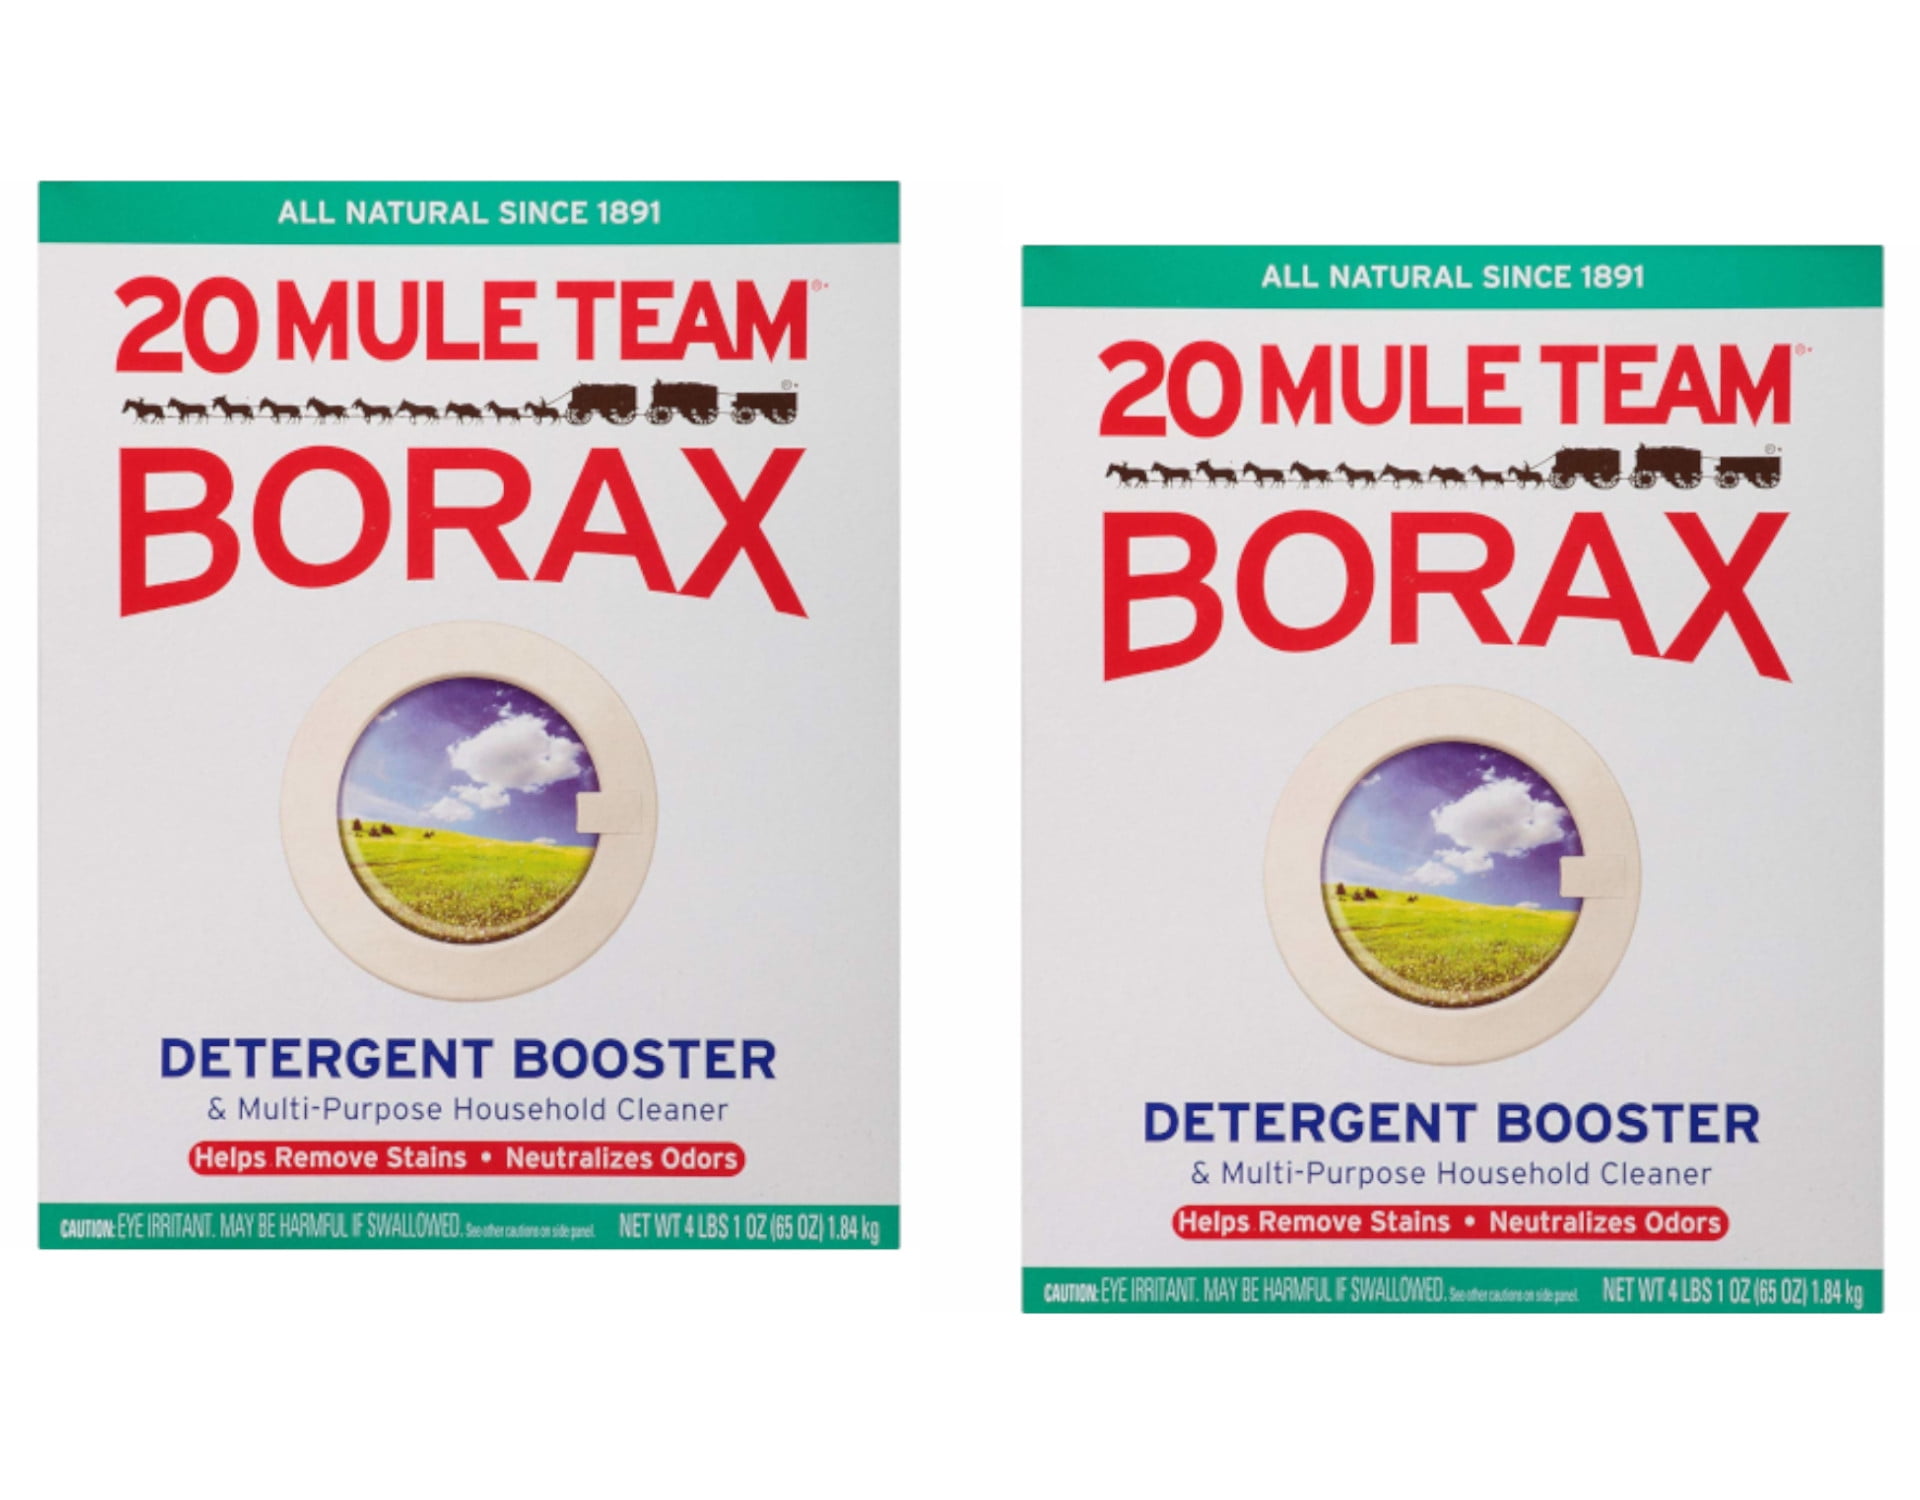 20 Mule Team Borax Natural Laundry Booster & Multi-Purpose Household  Cleaner 76 oz 2.15 kg,2pk 